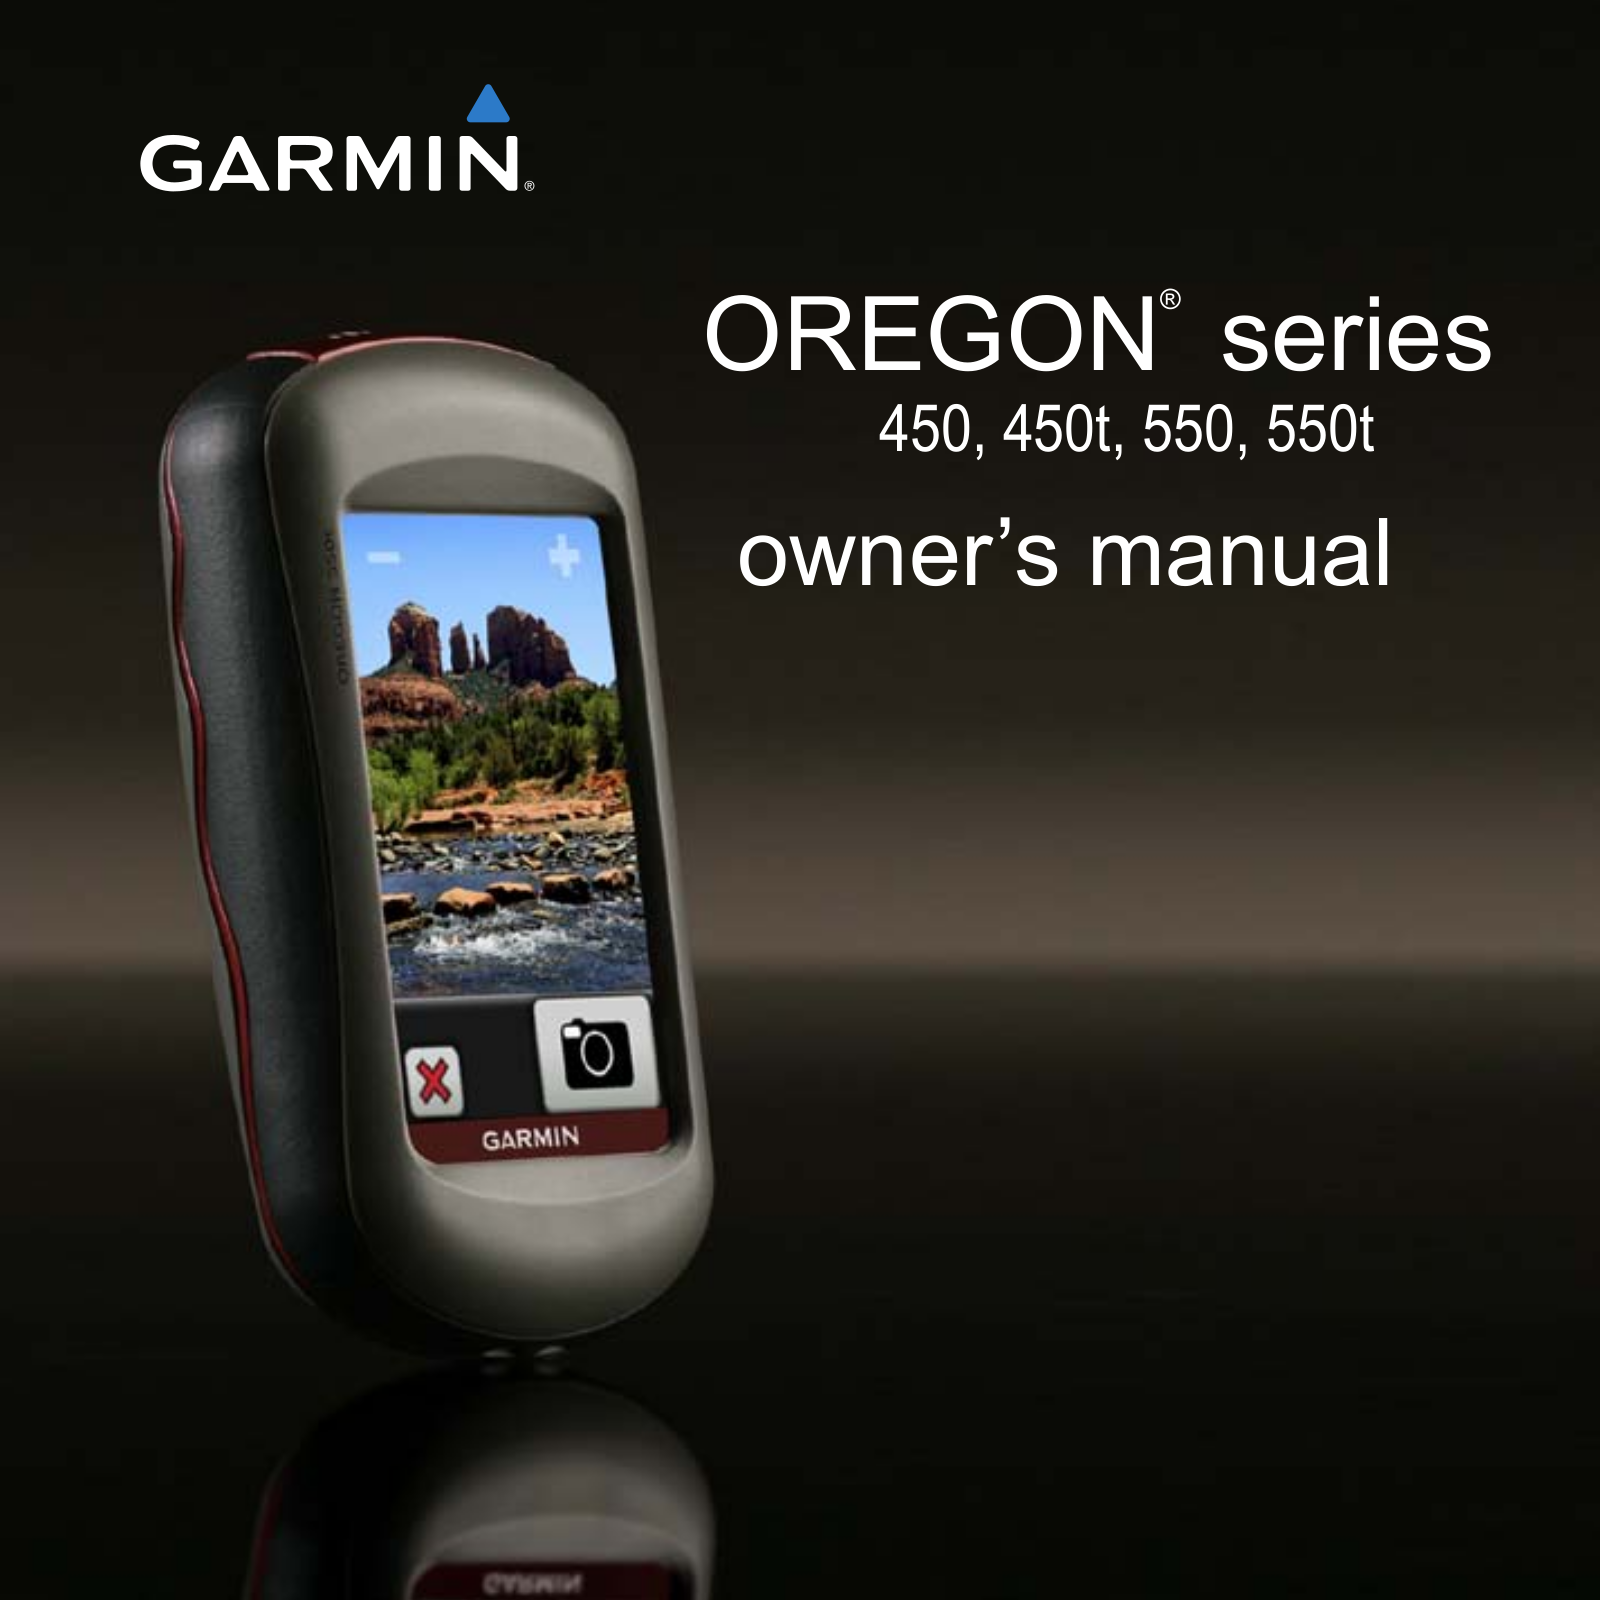 Garmin Oregon 550t, Oregon 550 Thai, Oregon 550 Korea, Oregon 550, Oregon 450 with TOPO Germany Light User Manual